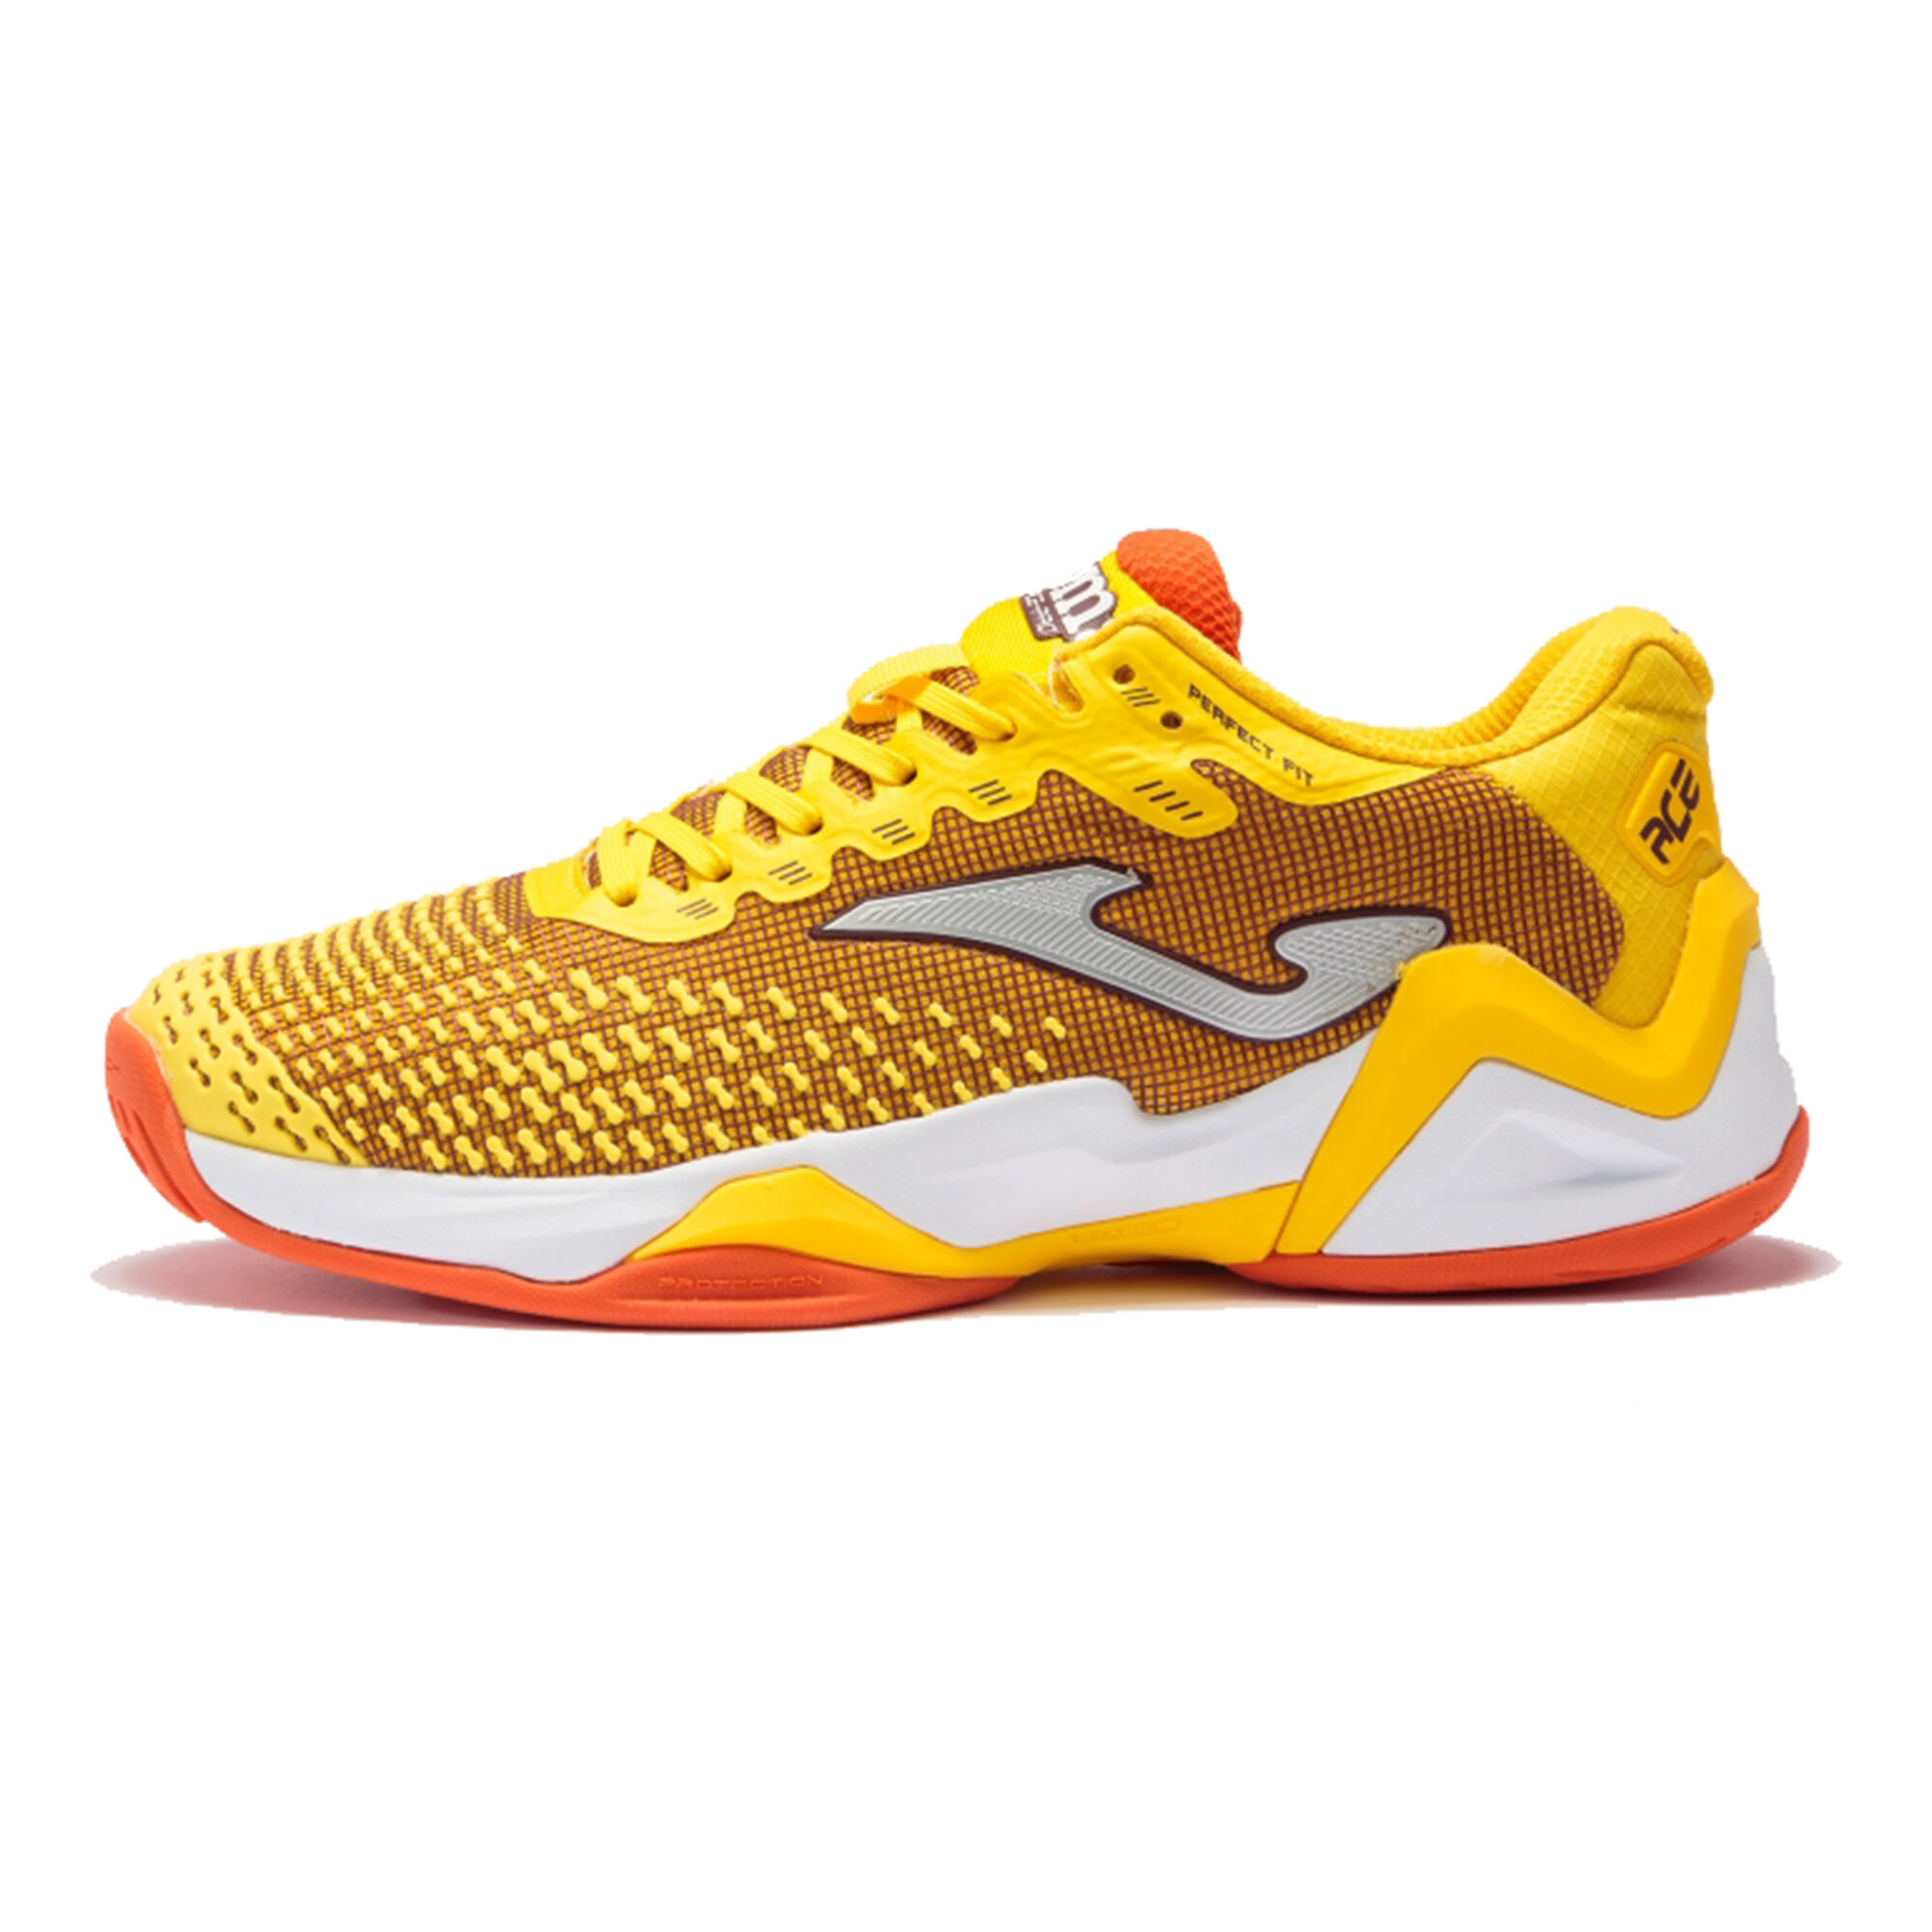 Valle siguiente Recuerdo Joma Ace Pro Clay Court Shoe Men - Golden Yellow, Orange online |  Padel-Point